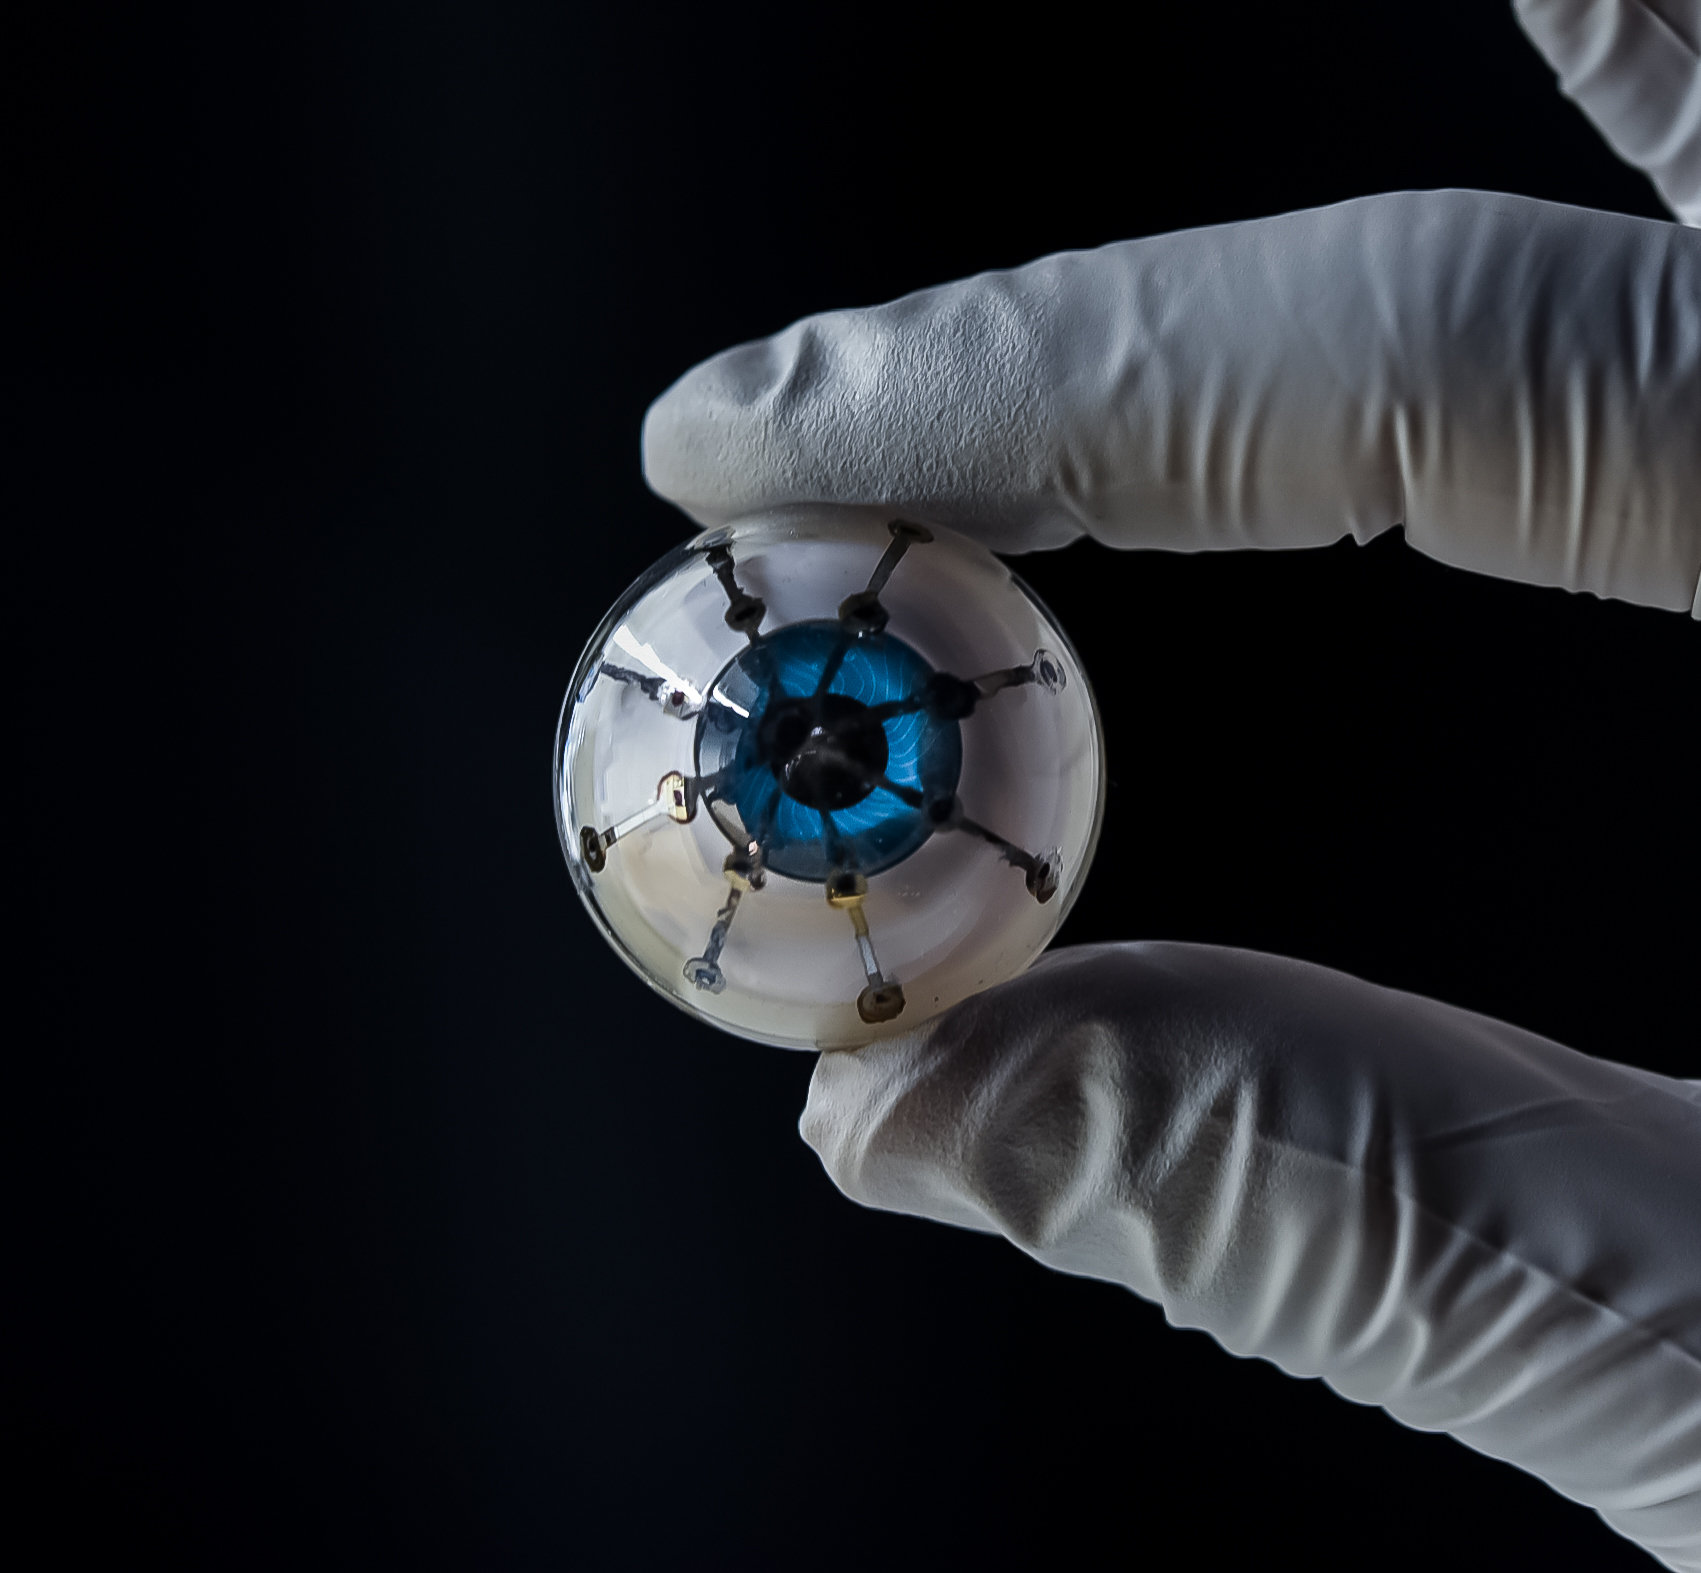 Researchers 3D print prototype for 'bionic eye'